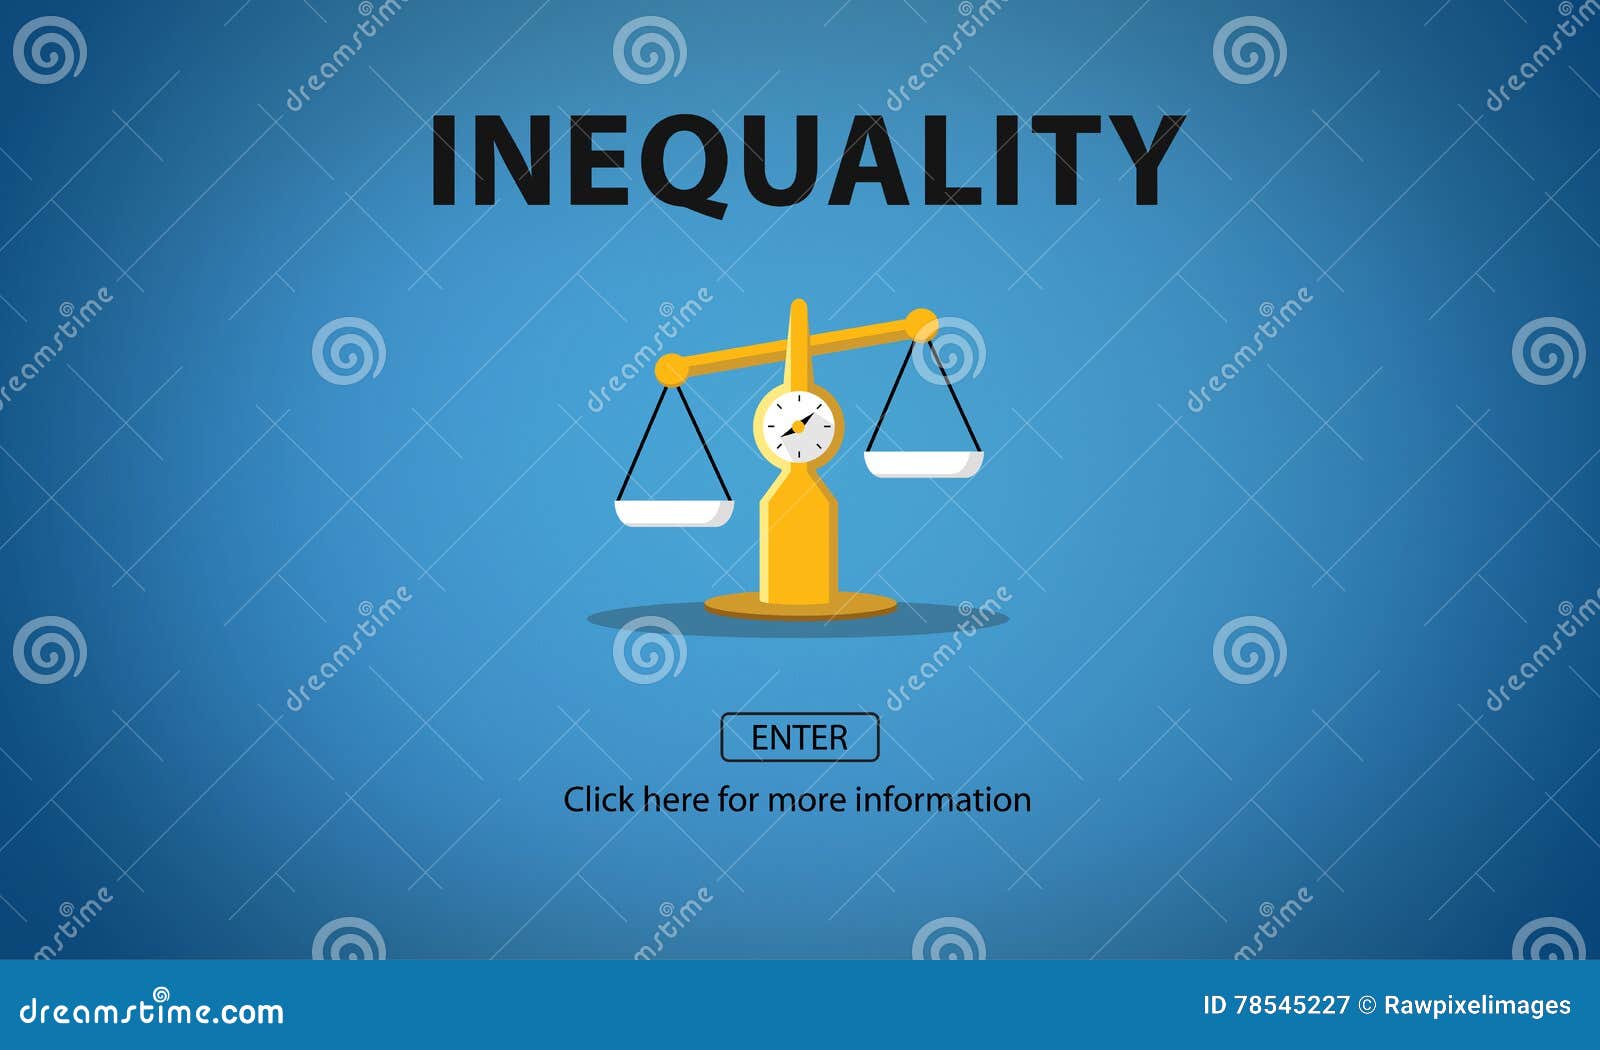 inequality imbalance victims prejudice bias concept